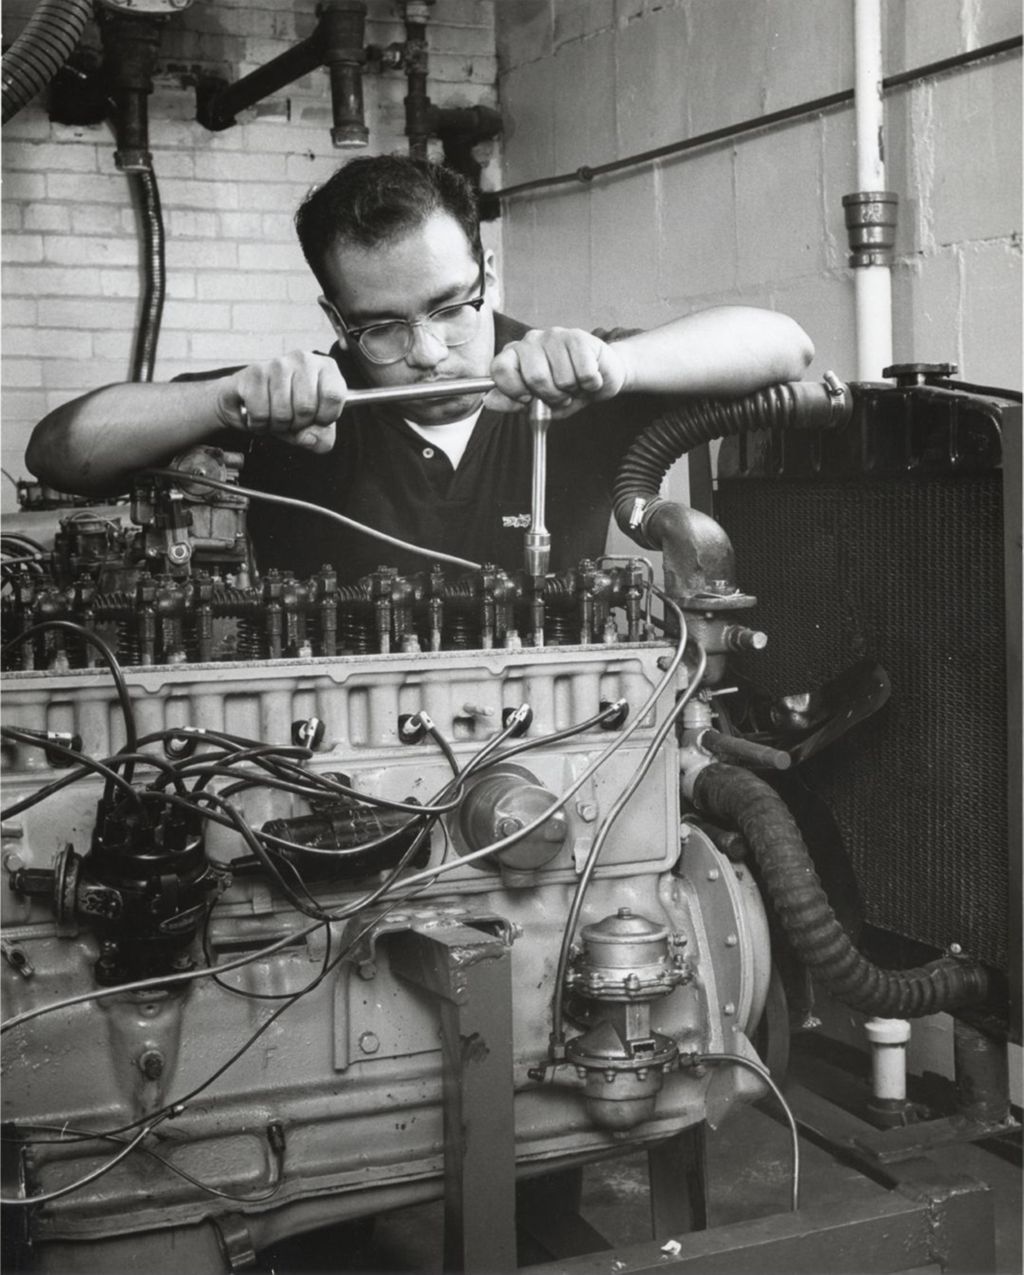 Man working on engine in automobile workshop